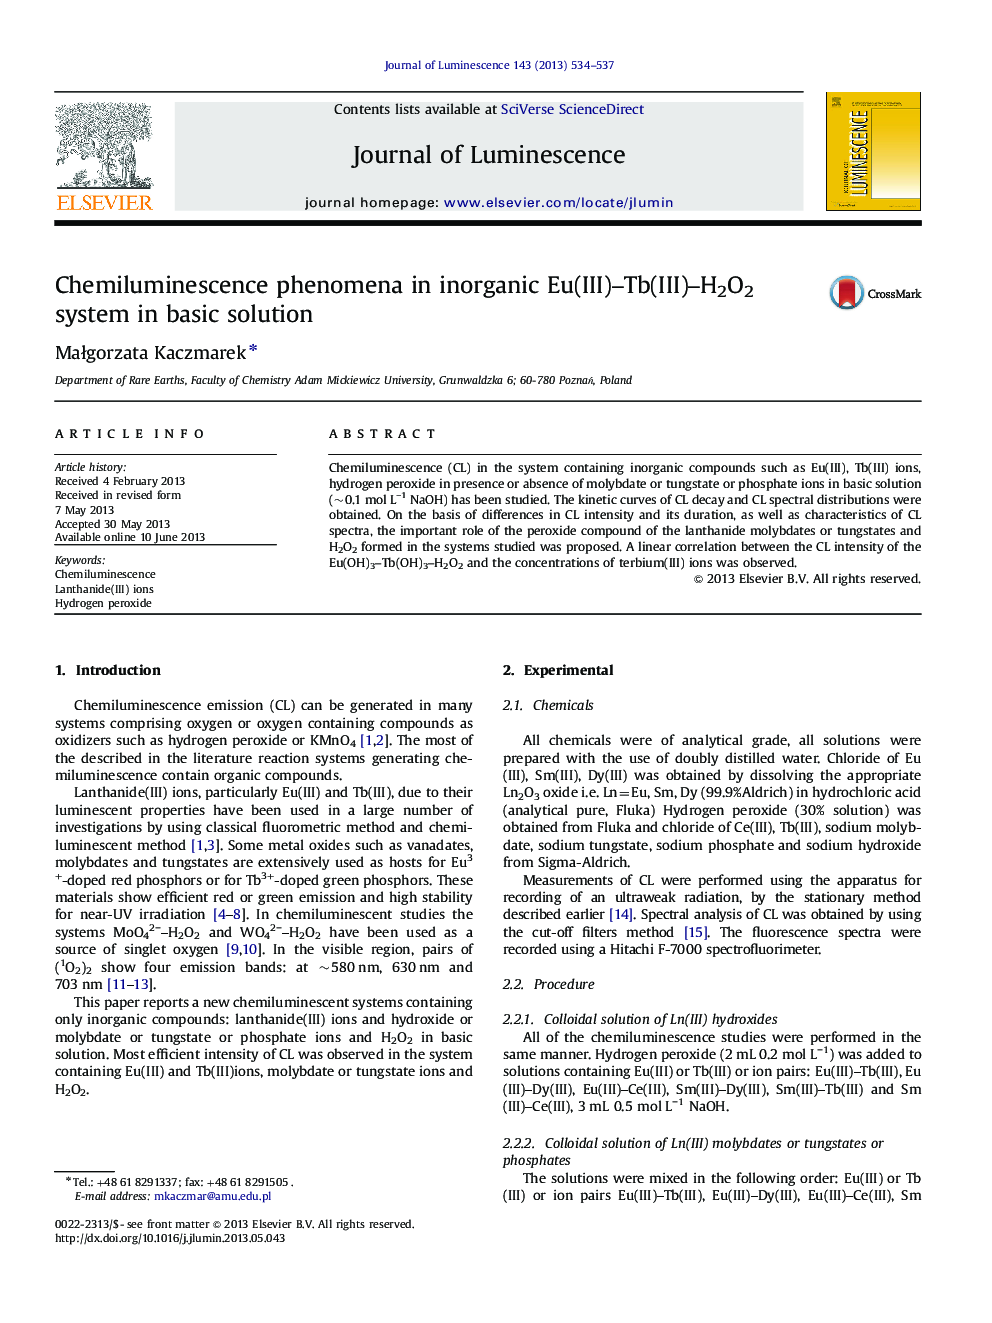 Chemiluminescence phenomena in inorganic Eu(III)-Tb(III)-H2O2 system in basic solution